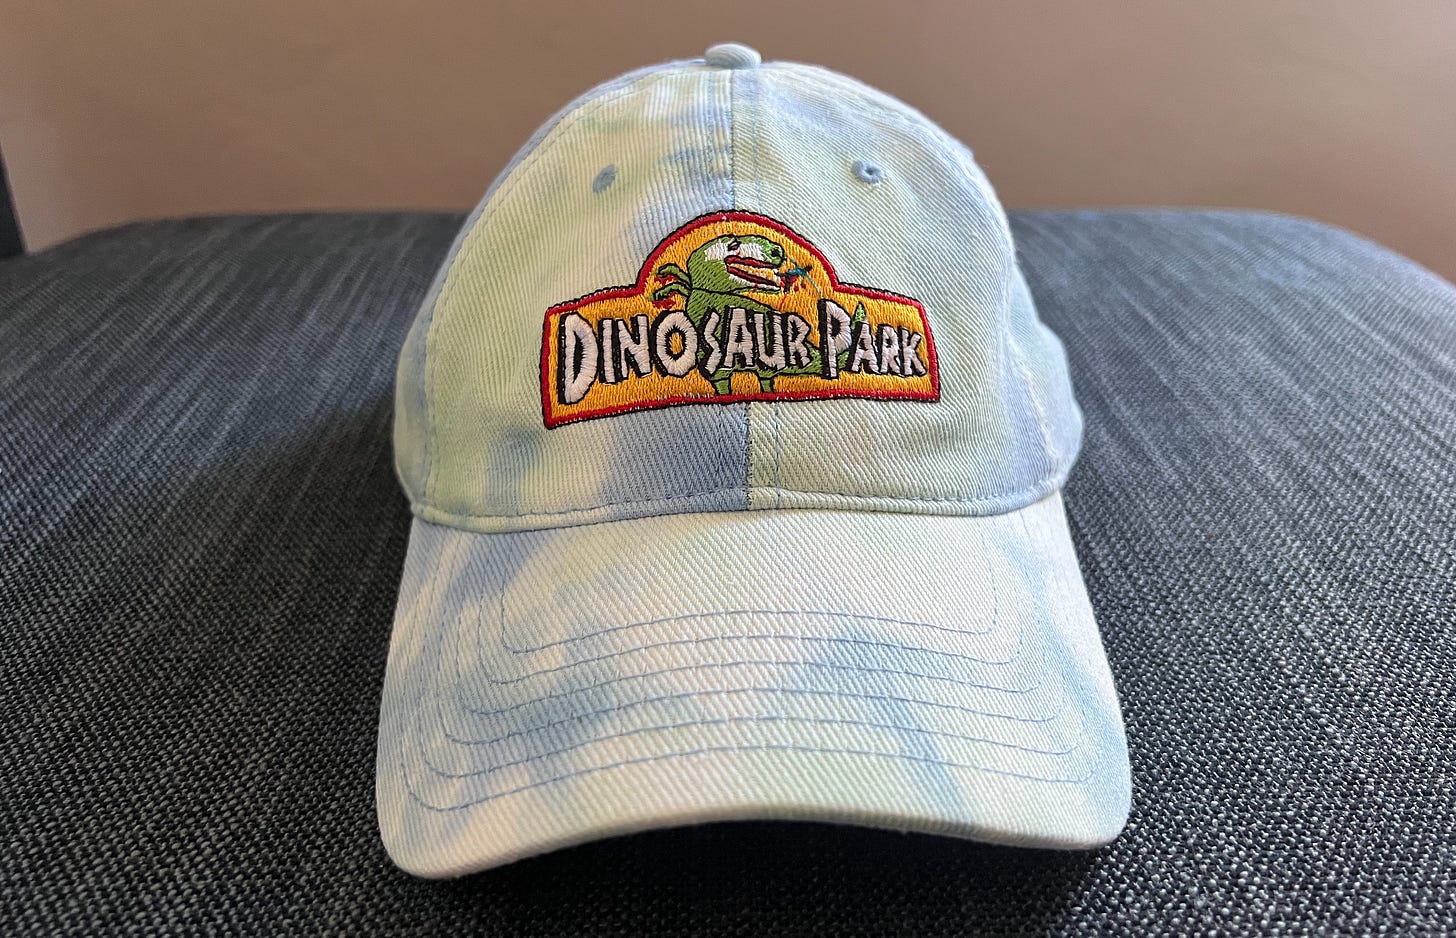 Tie die blue cap with DINOSAUR PARK logo on it, as dinosaur eats human